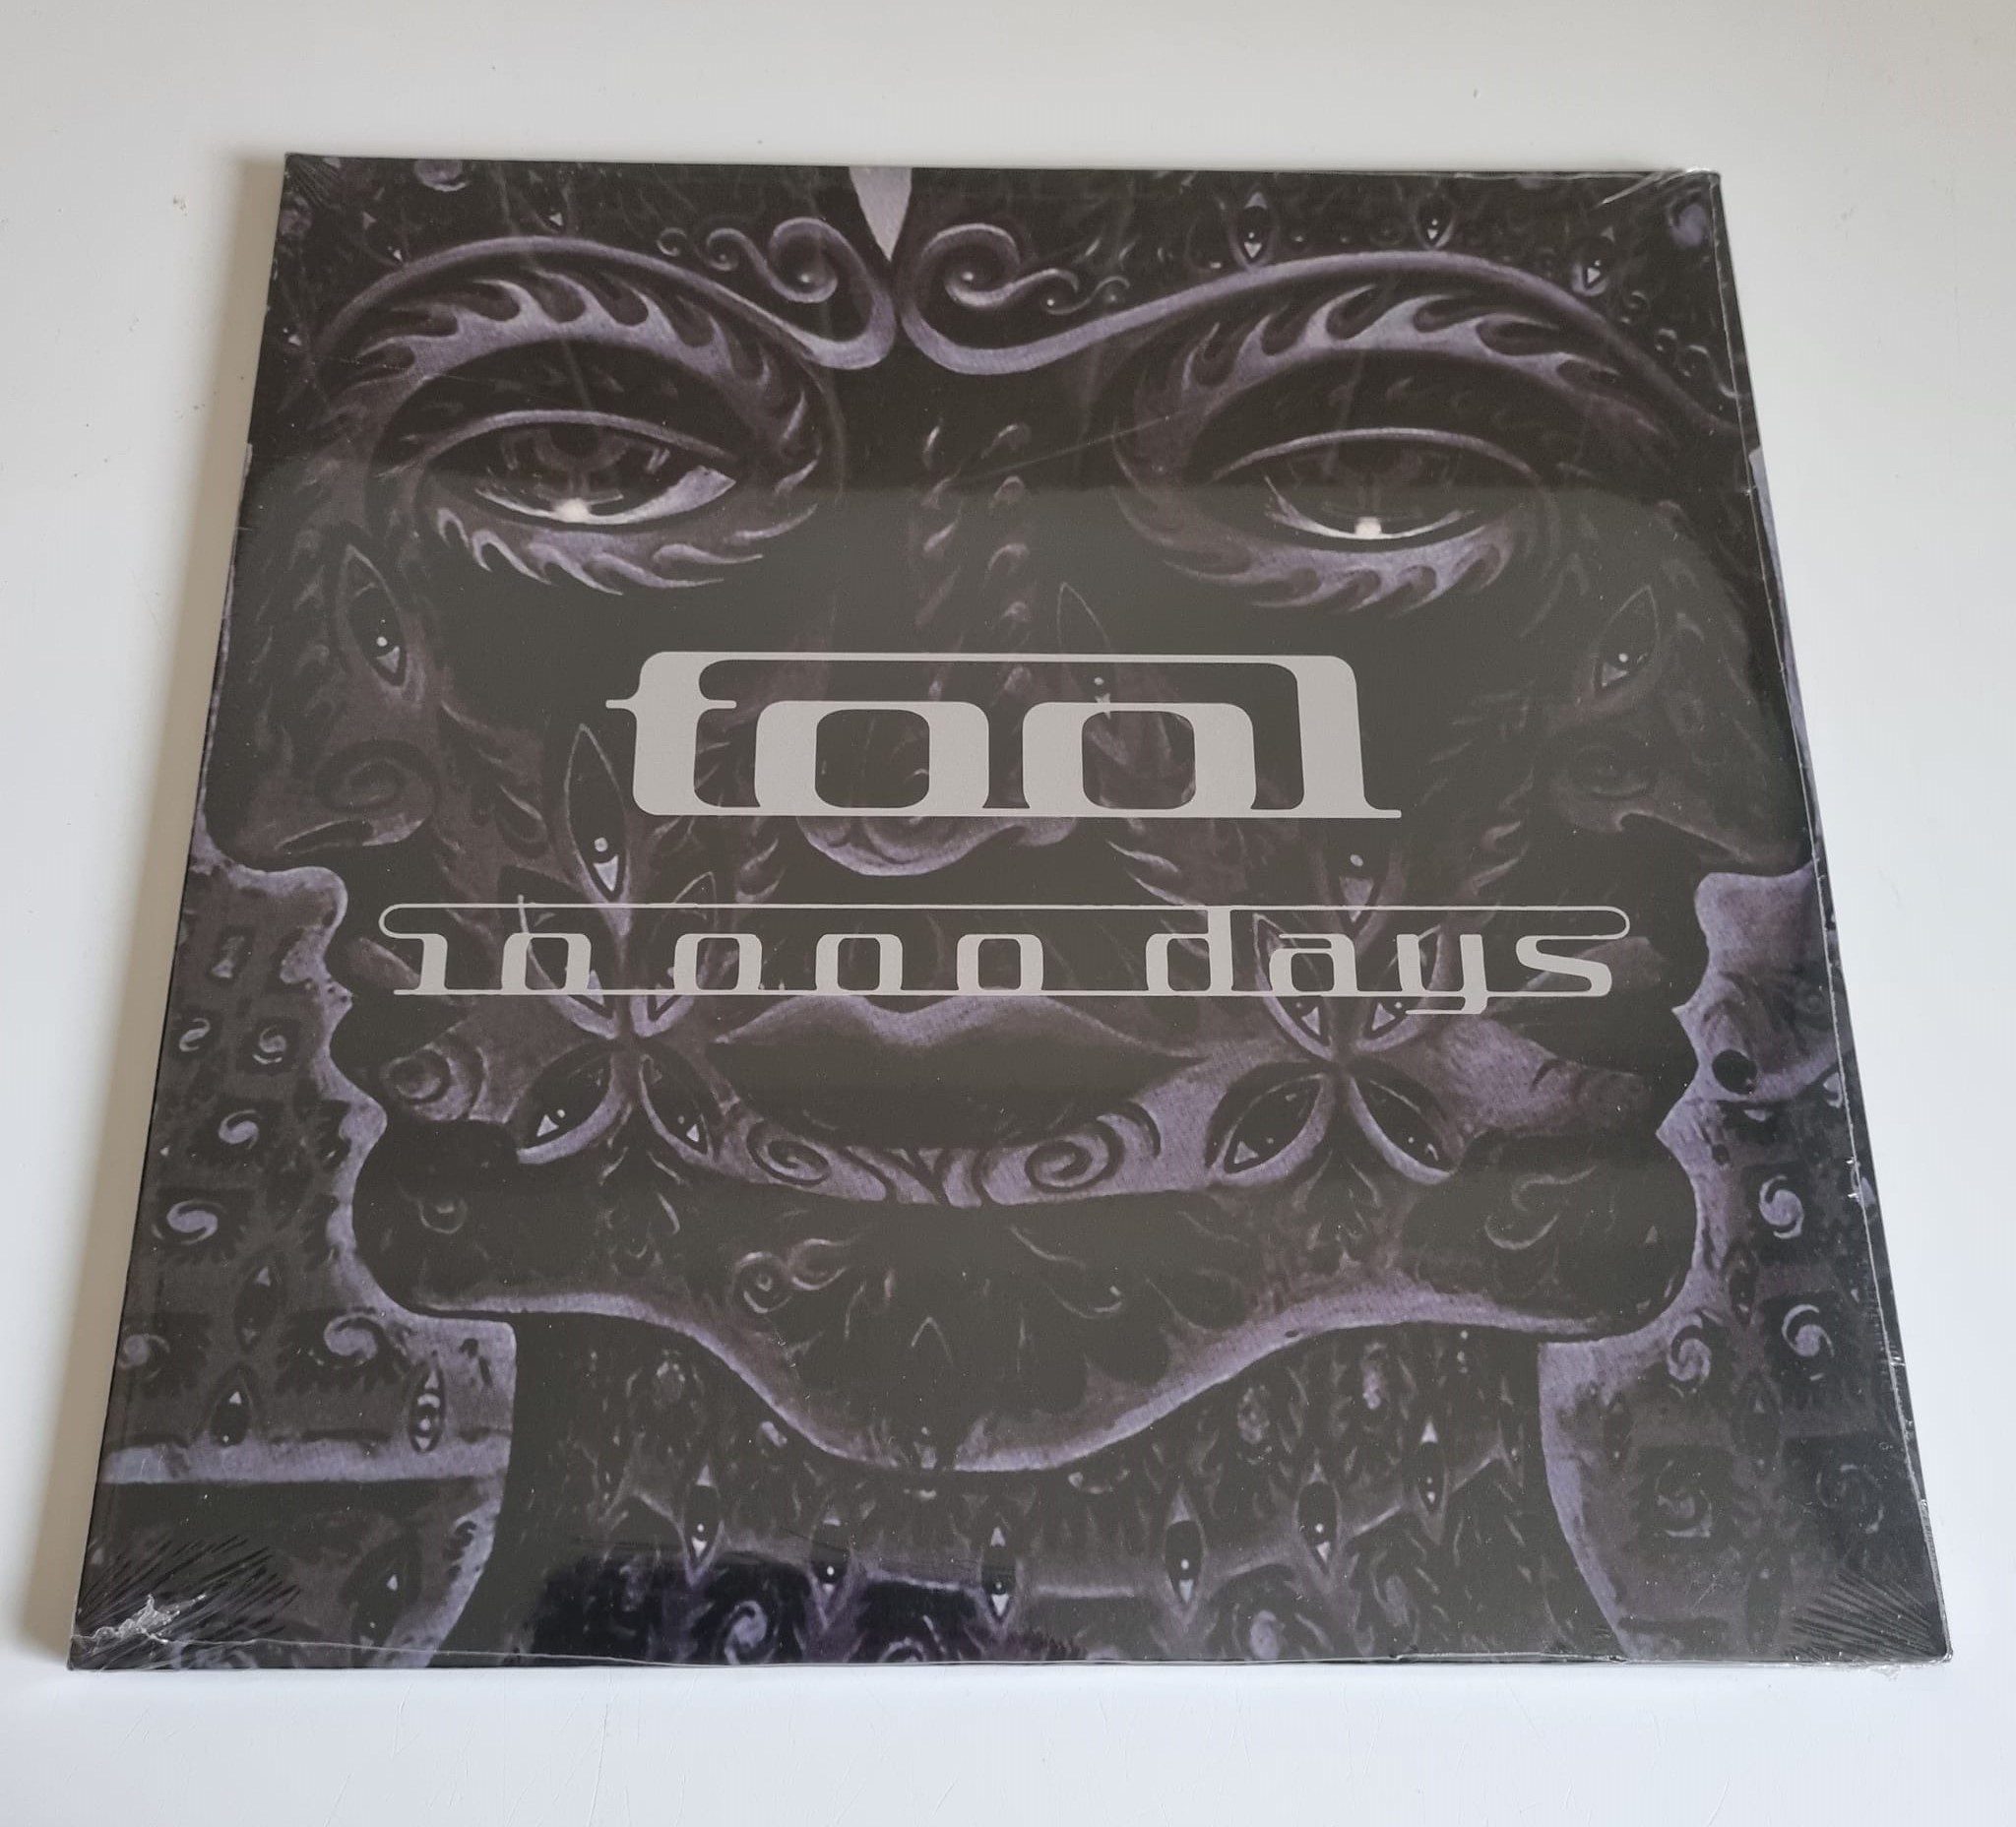 Tool – 10,000 Days (Re-issue) LP Record Vinyl Album - Rock Vinyl Revival